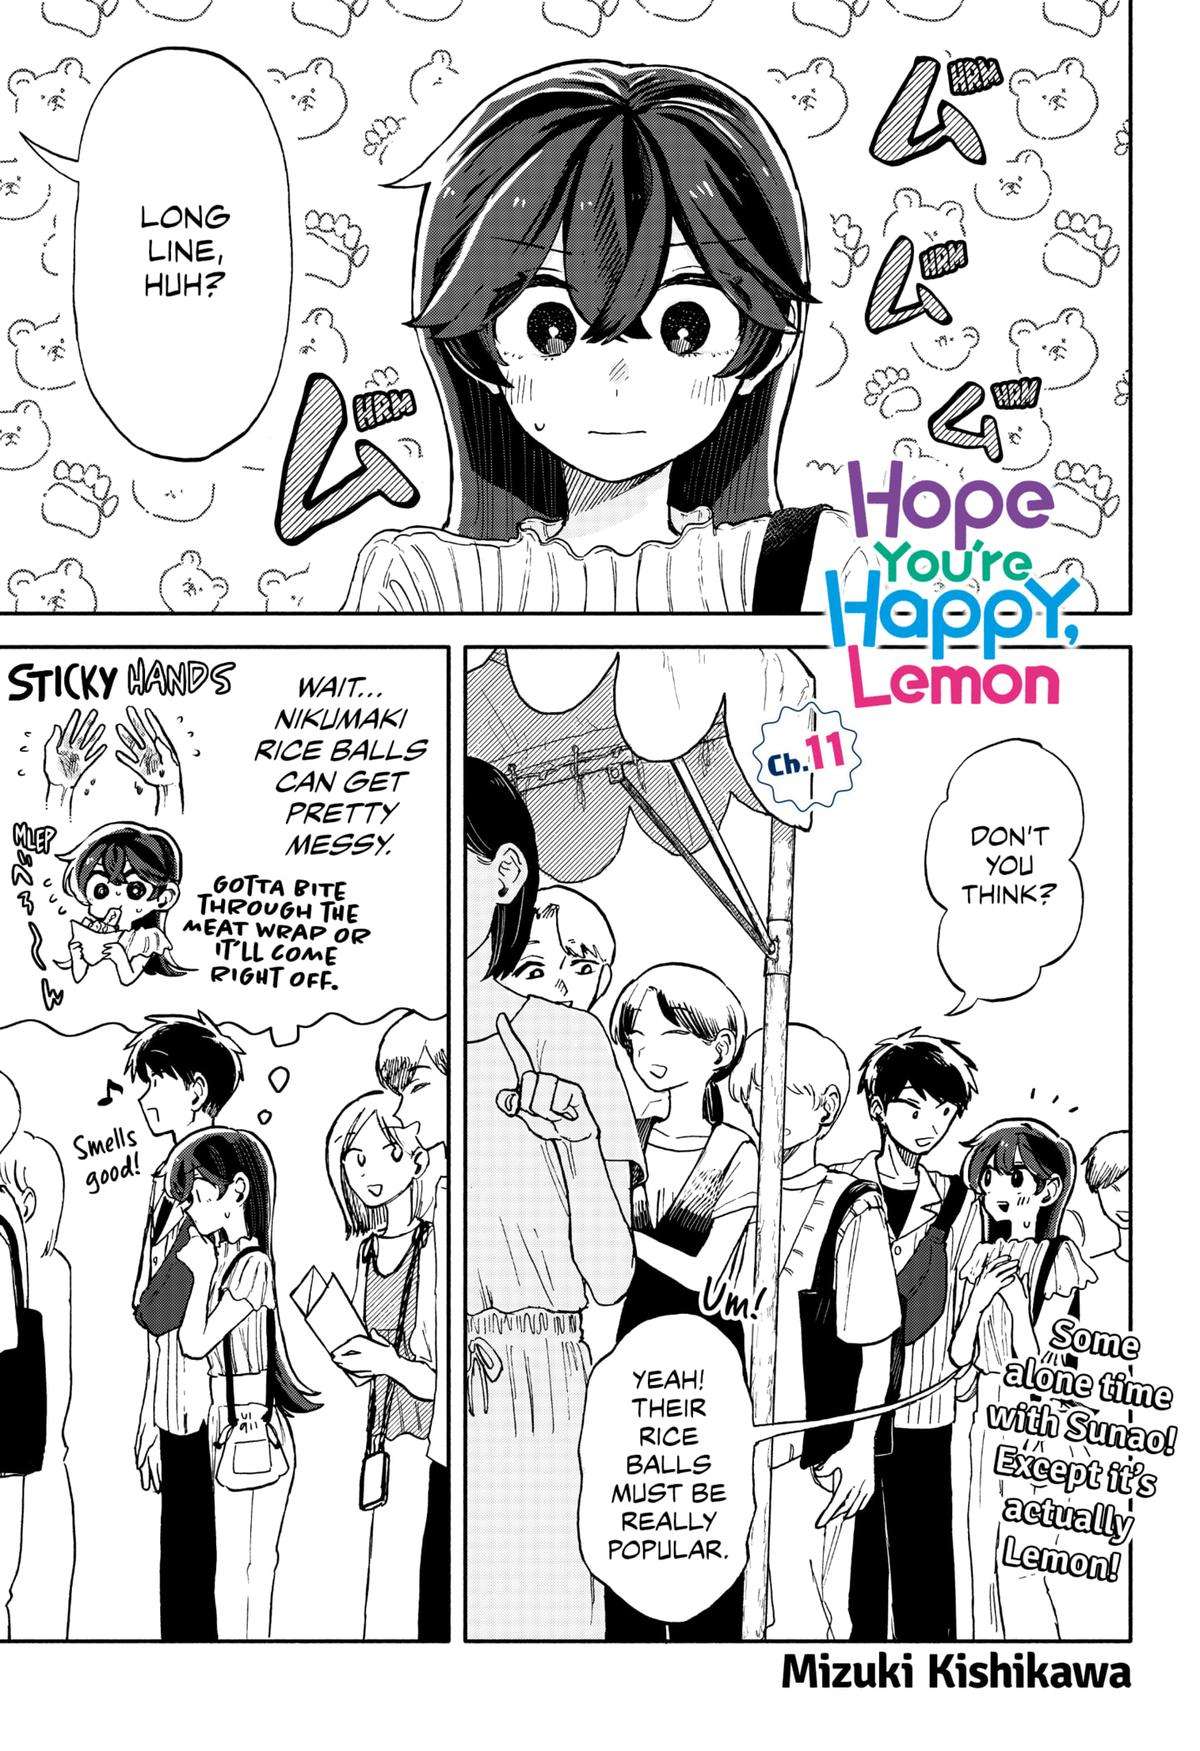 Hope You're Happy, Lemon - chapter 11 - #1